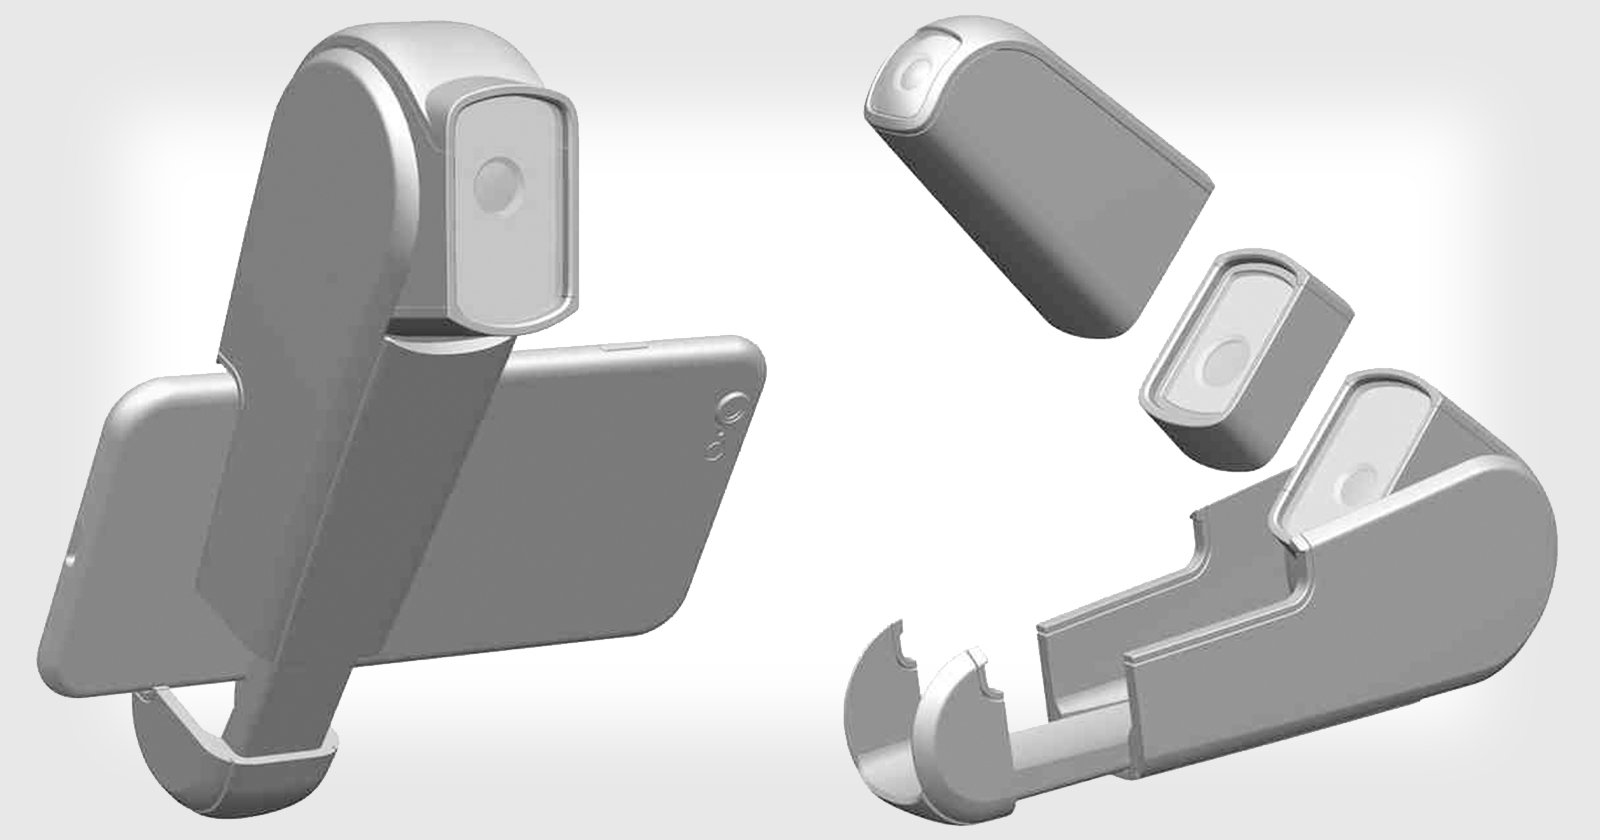 Canon Patents Smartphone Camera Attachment with Multiple Lenses